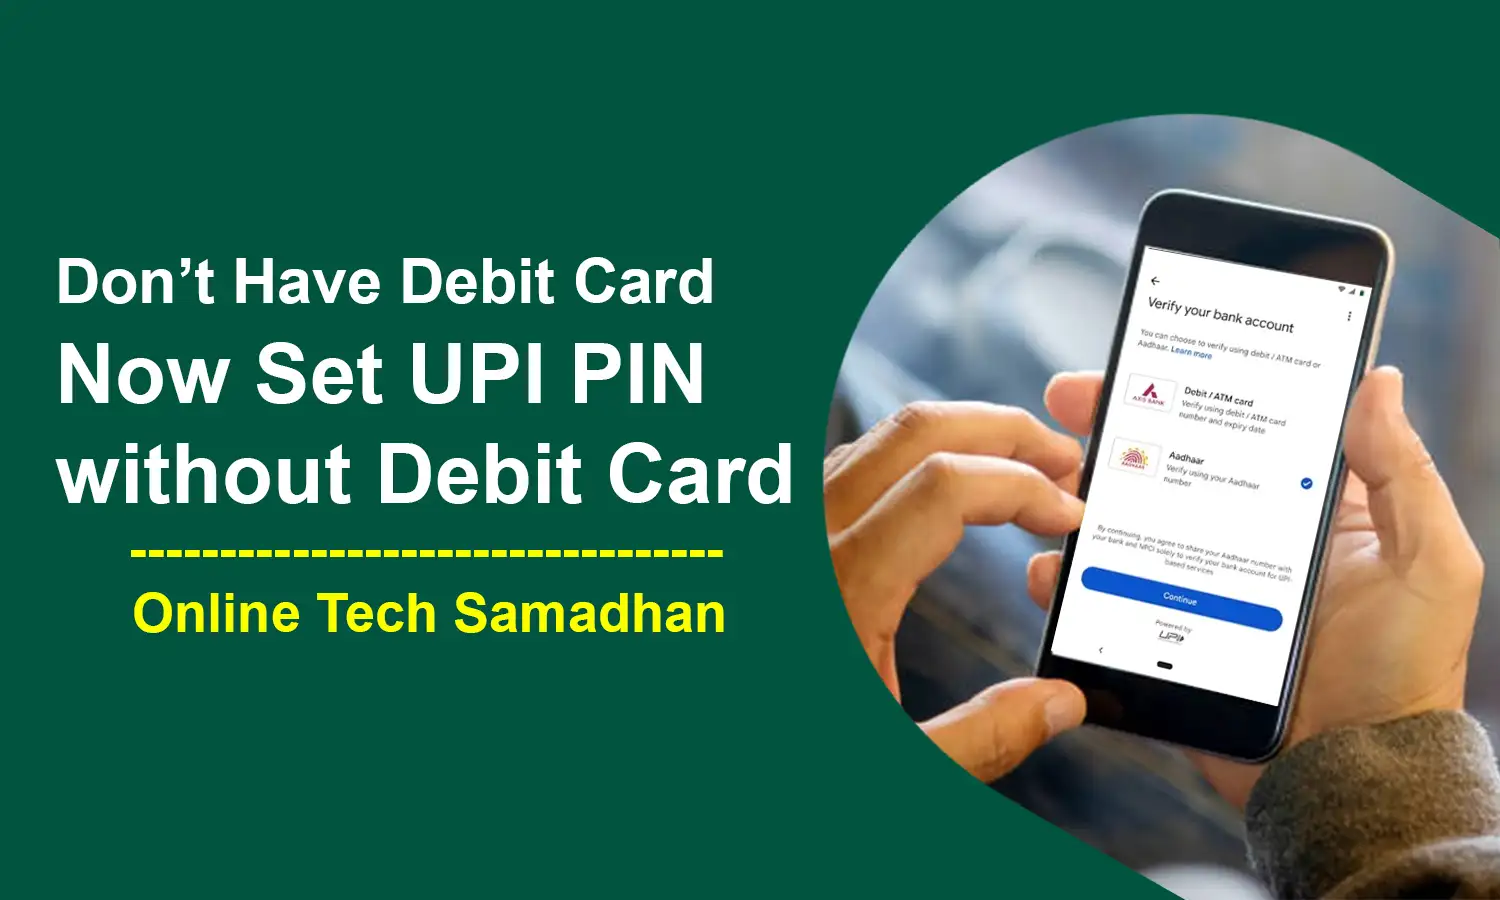 Set UPI PIN without a Debit Card